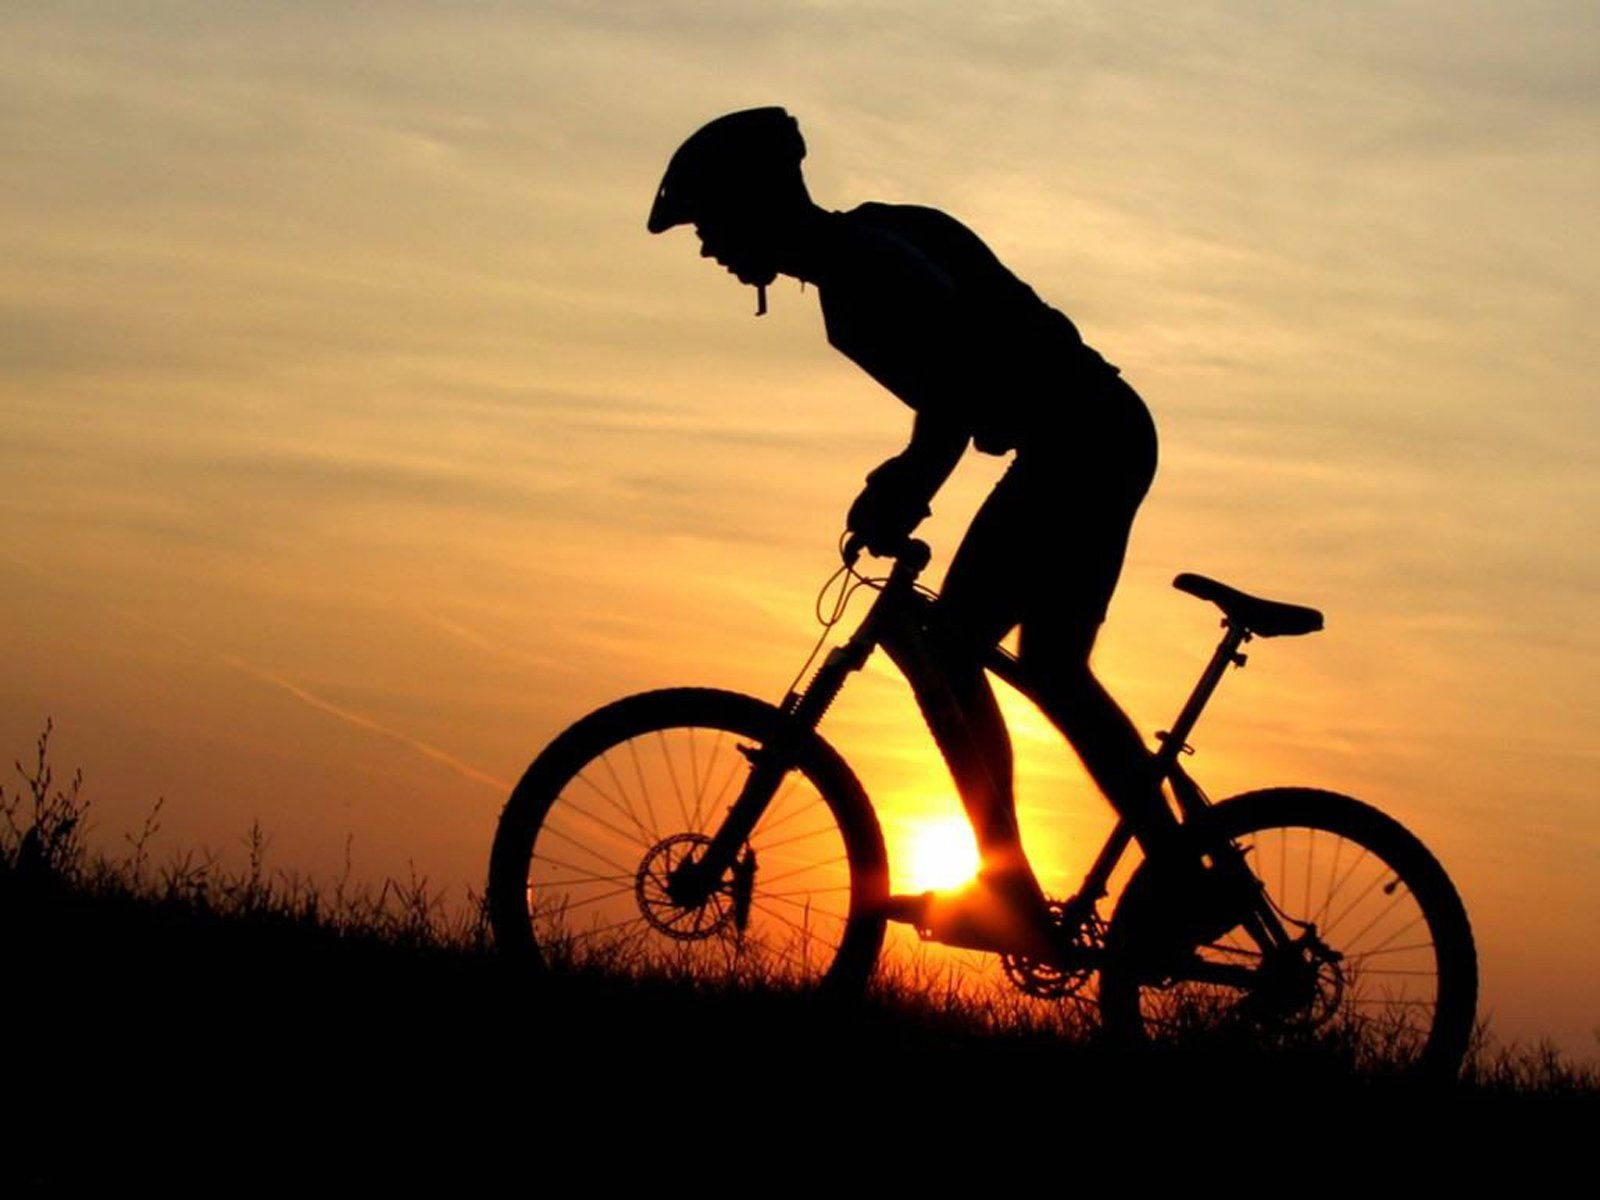 A Silhouette Of A Cyclist Enjoying A Beautiful Sunset Bike Ride. Background